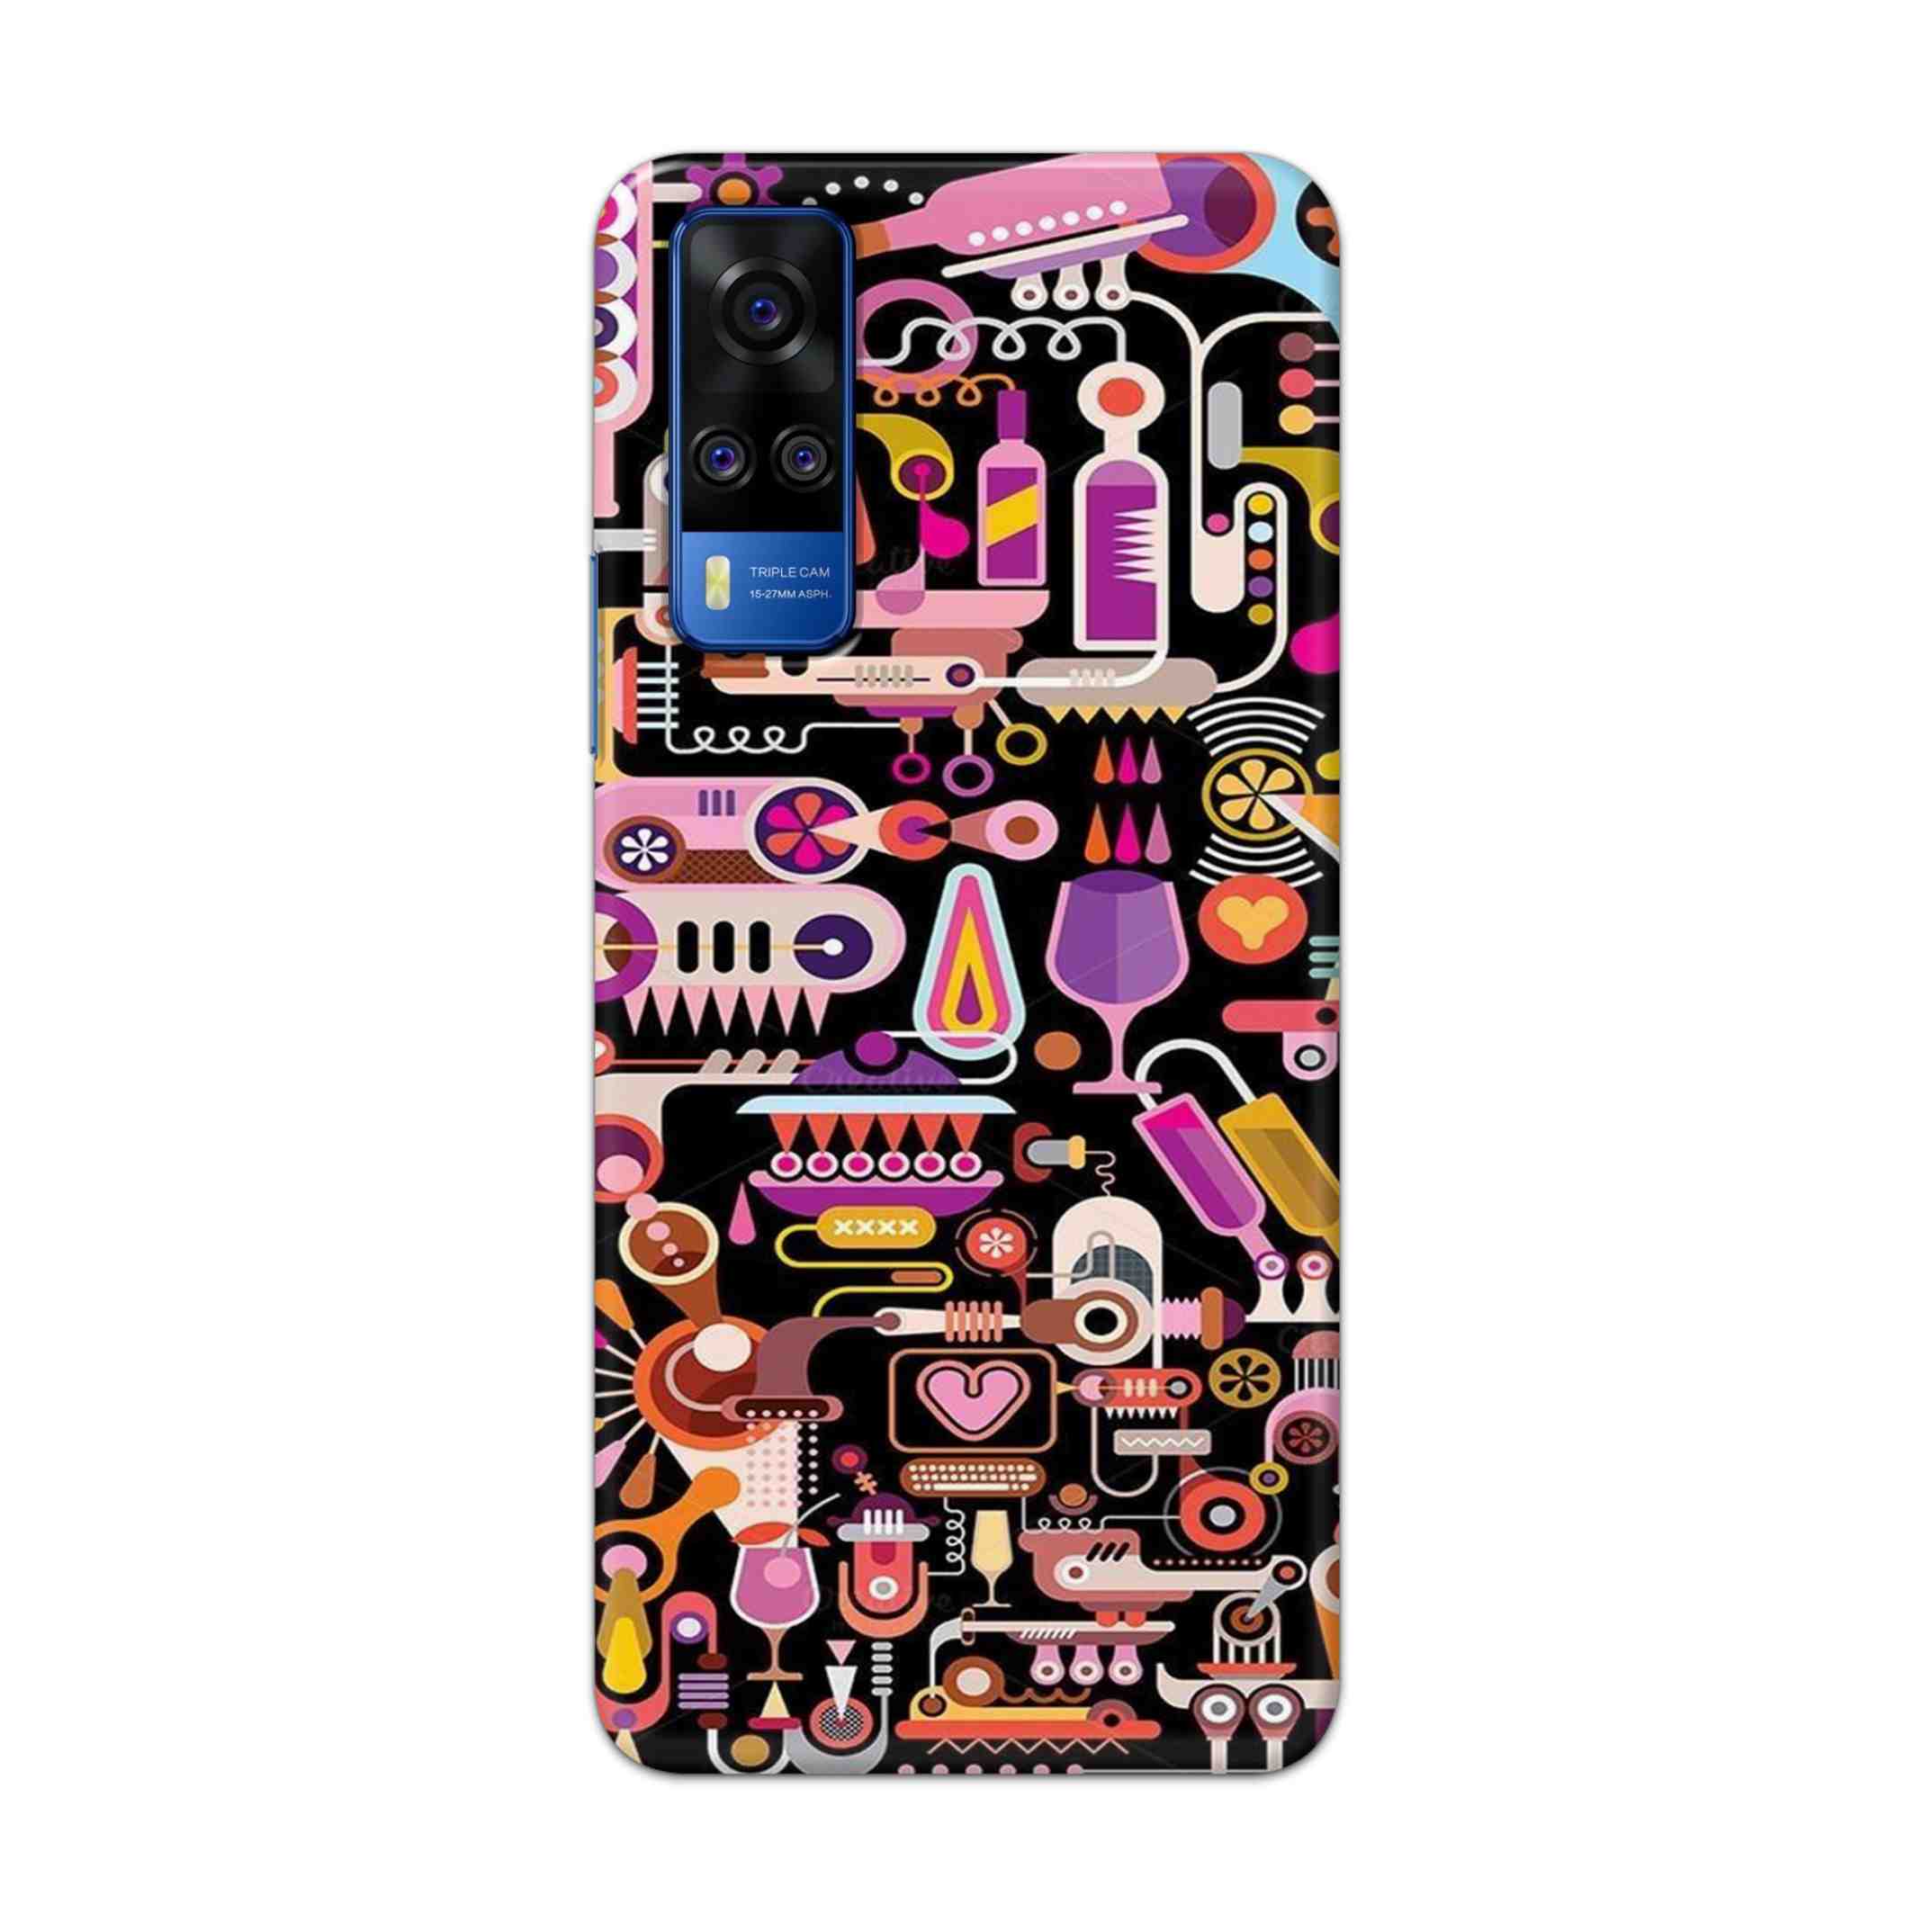 Buy Lab Art Hard Back Mobile Phone Case Cover For Vivo Y51a Online